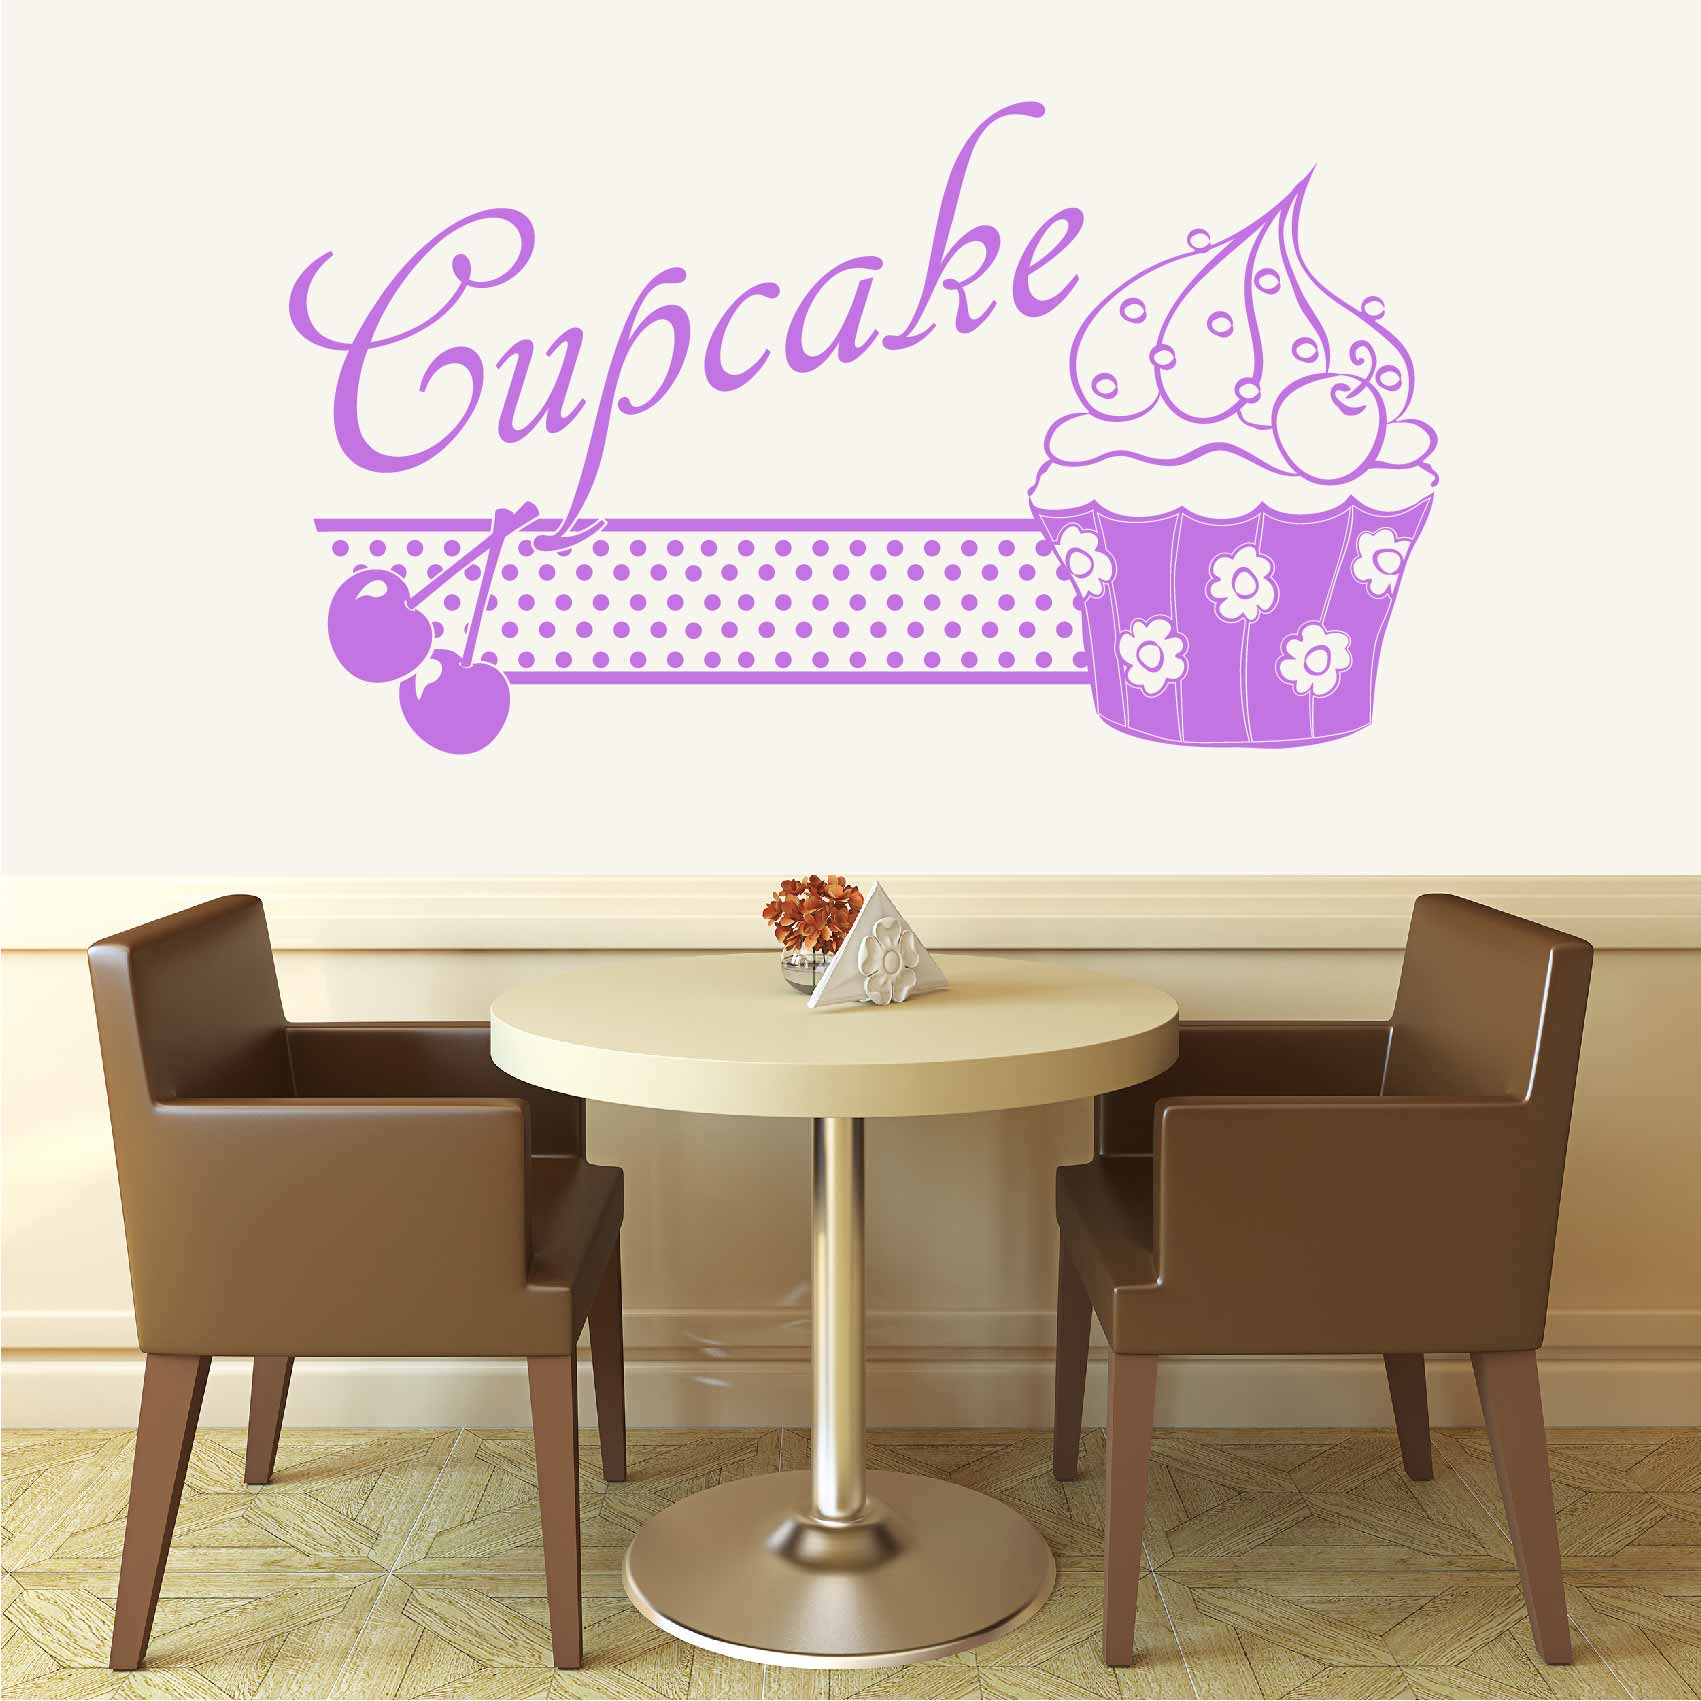 stickers-cupcake-deco-ref3cupcake-autocollant-muraux-cuisine-salle-a-manger-salon-sticker-mural-deco-gateau-cupcakes-gateaux